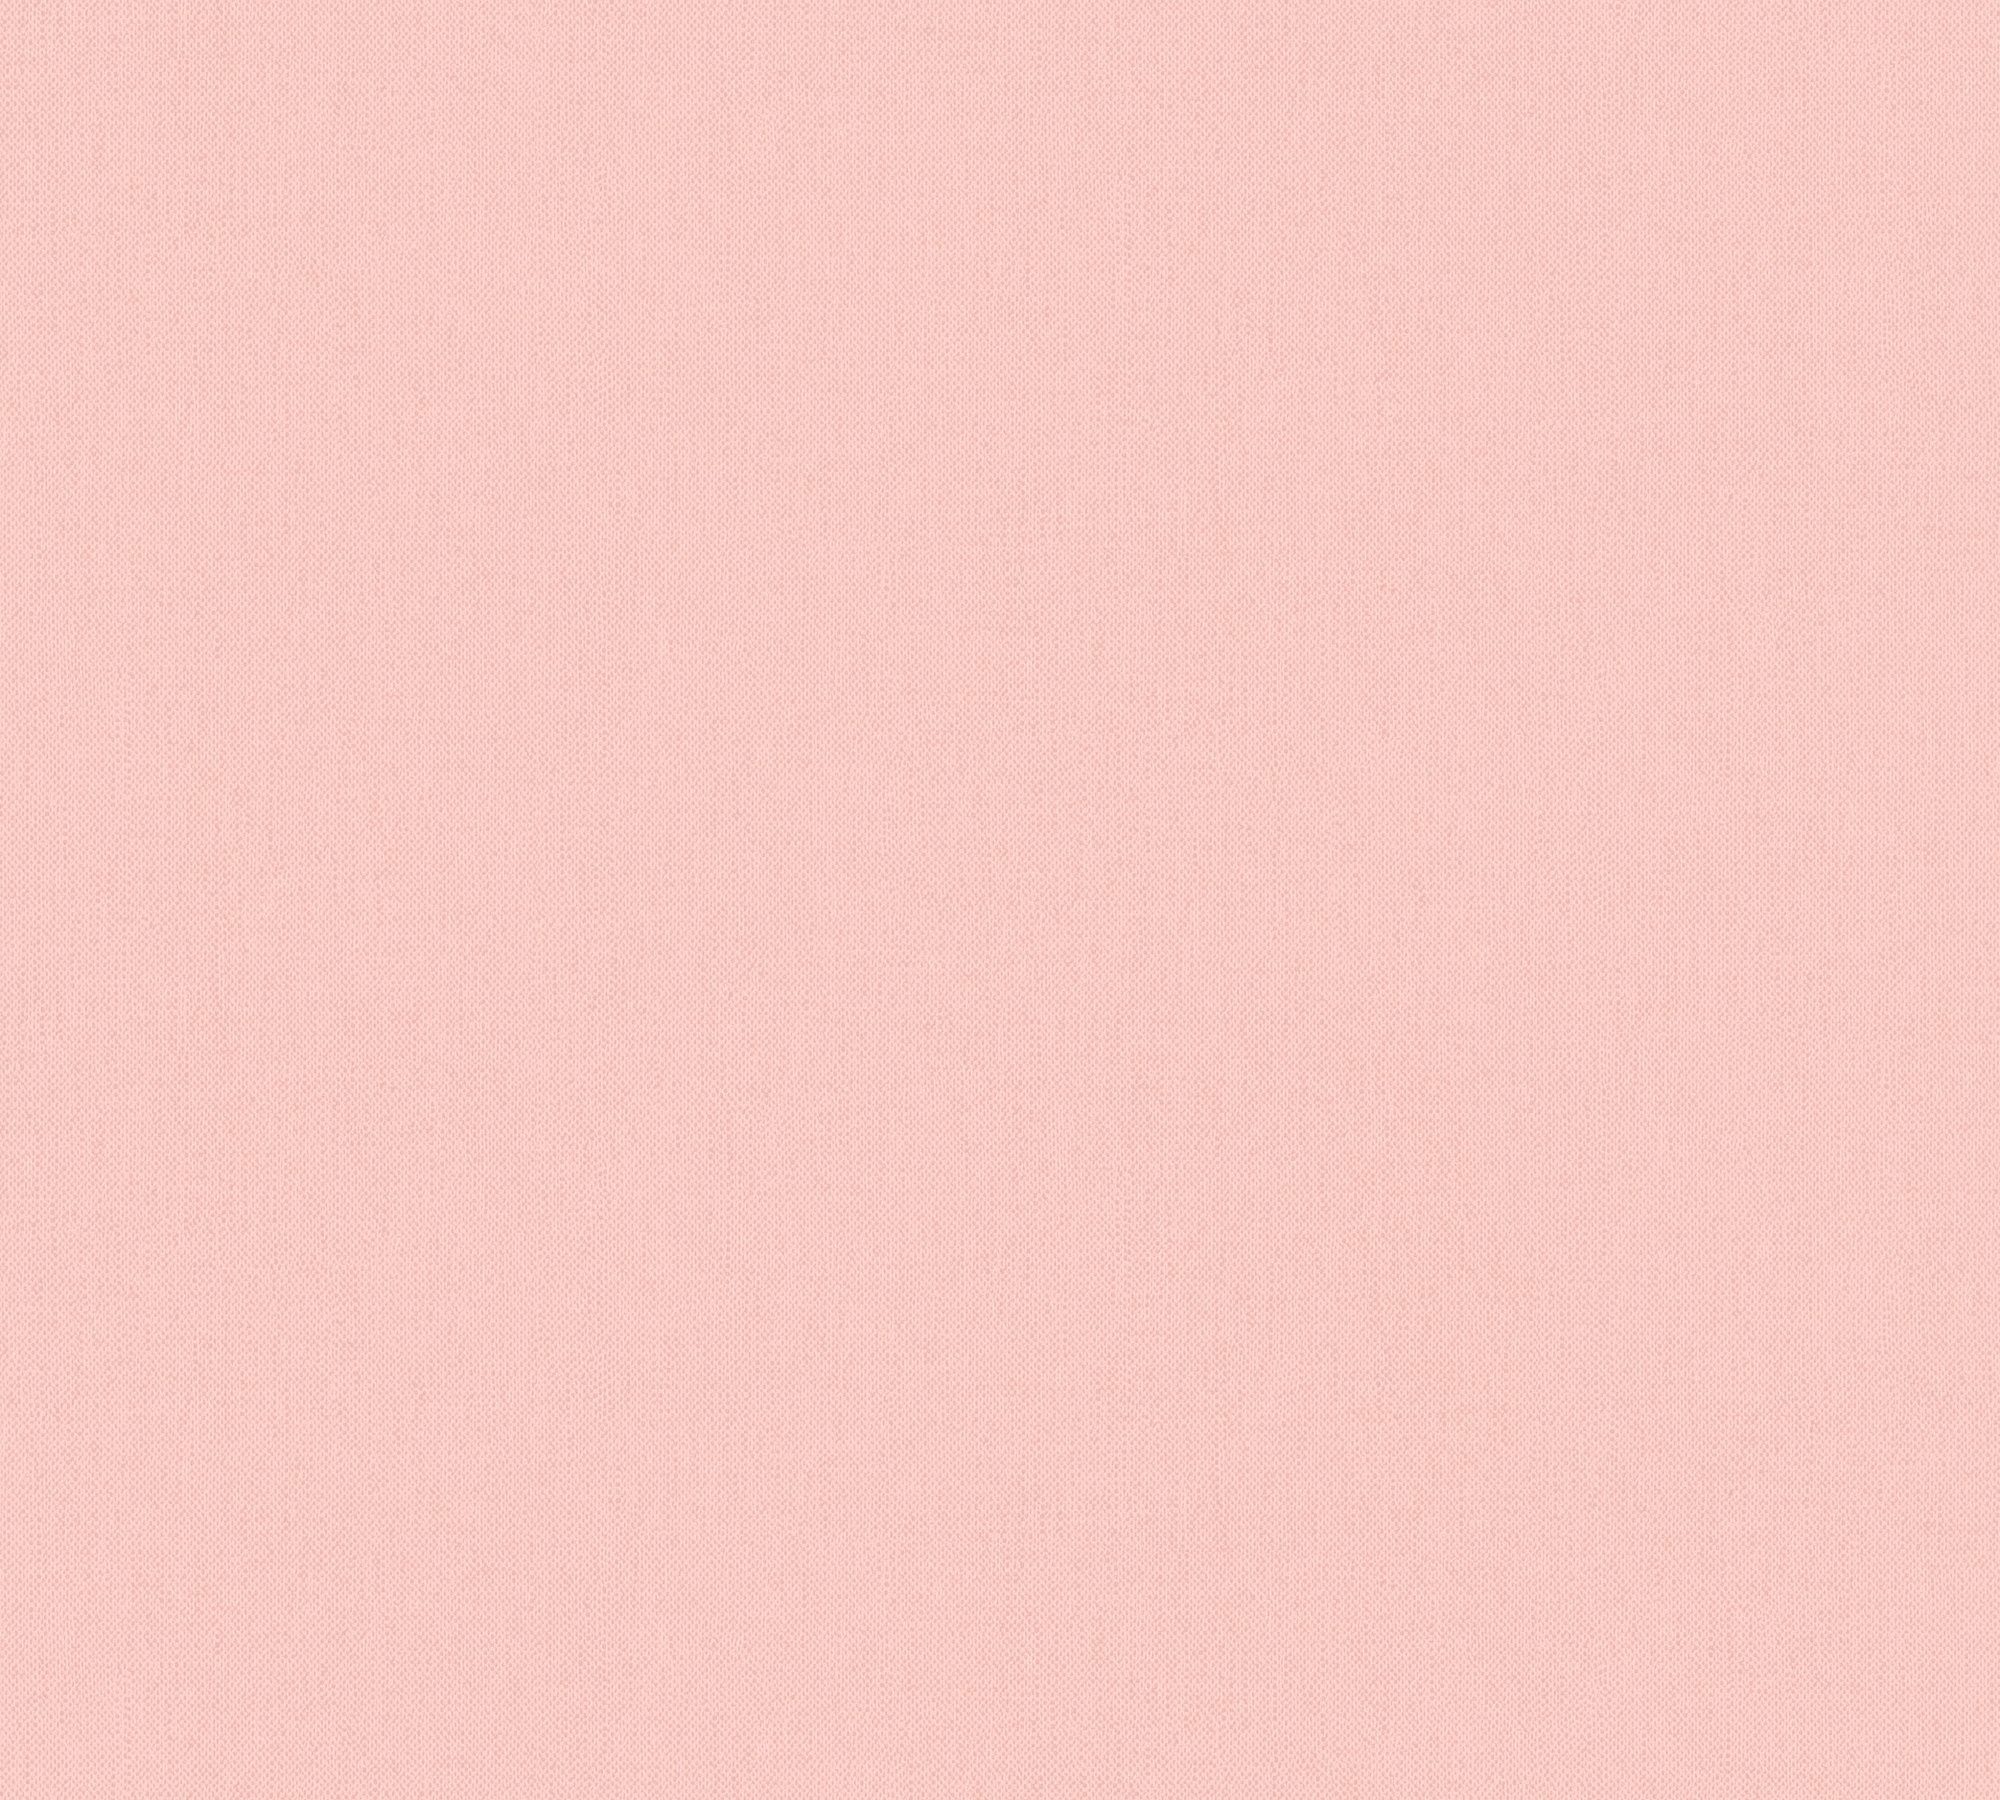 Vliestapete Impression, einfarbig glatt, rosa einfarbig, Floral unifarben, Uni Architects Tapete Paper